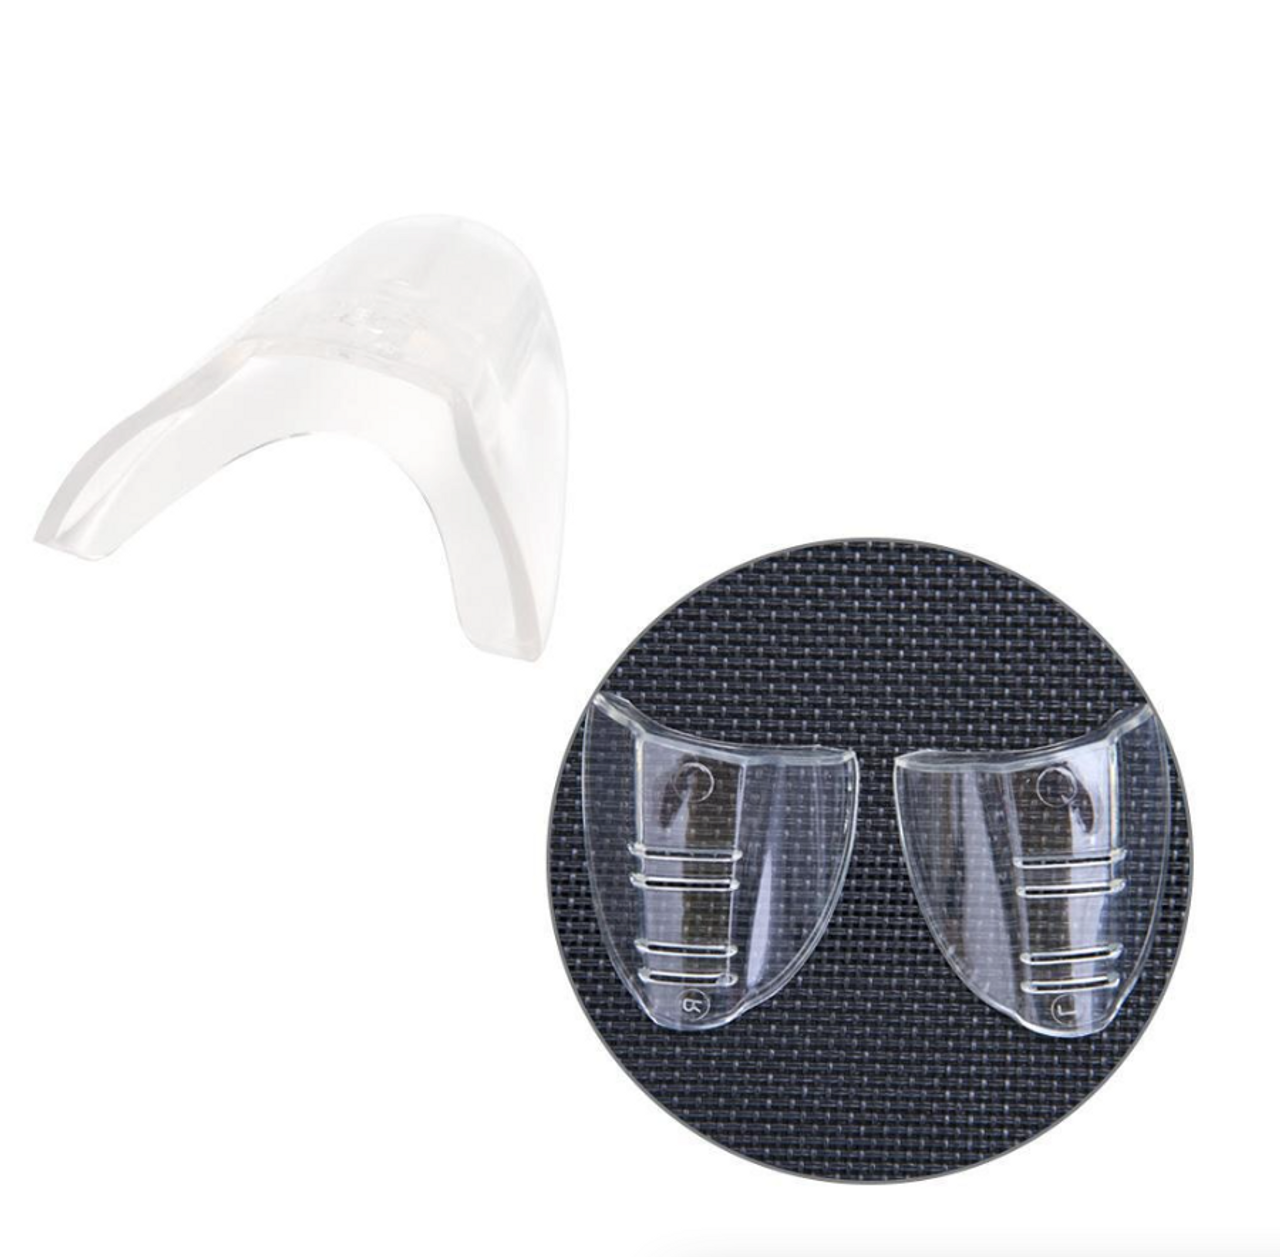 2 Pairs Side Shields For Eye Glasses Slip On Safety Glasses Shield Universal US